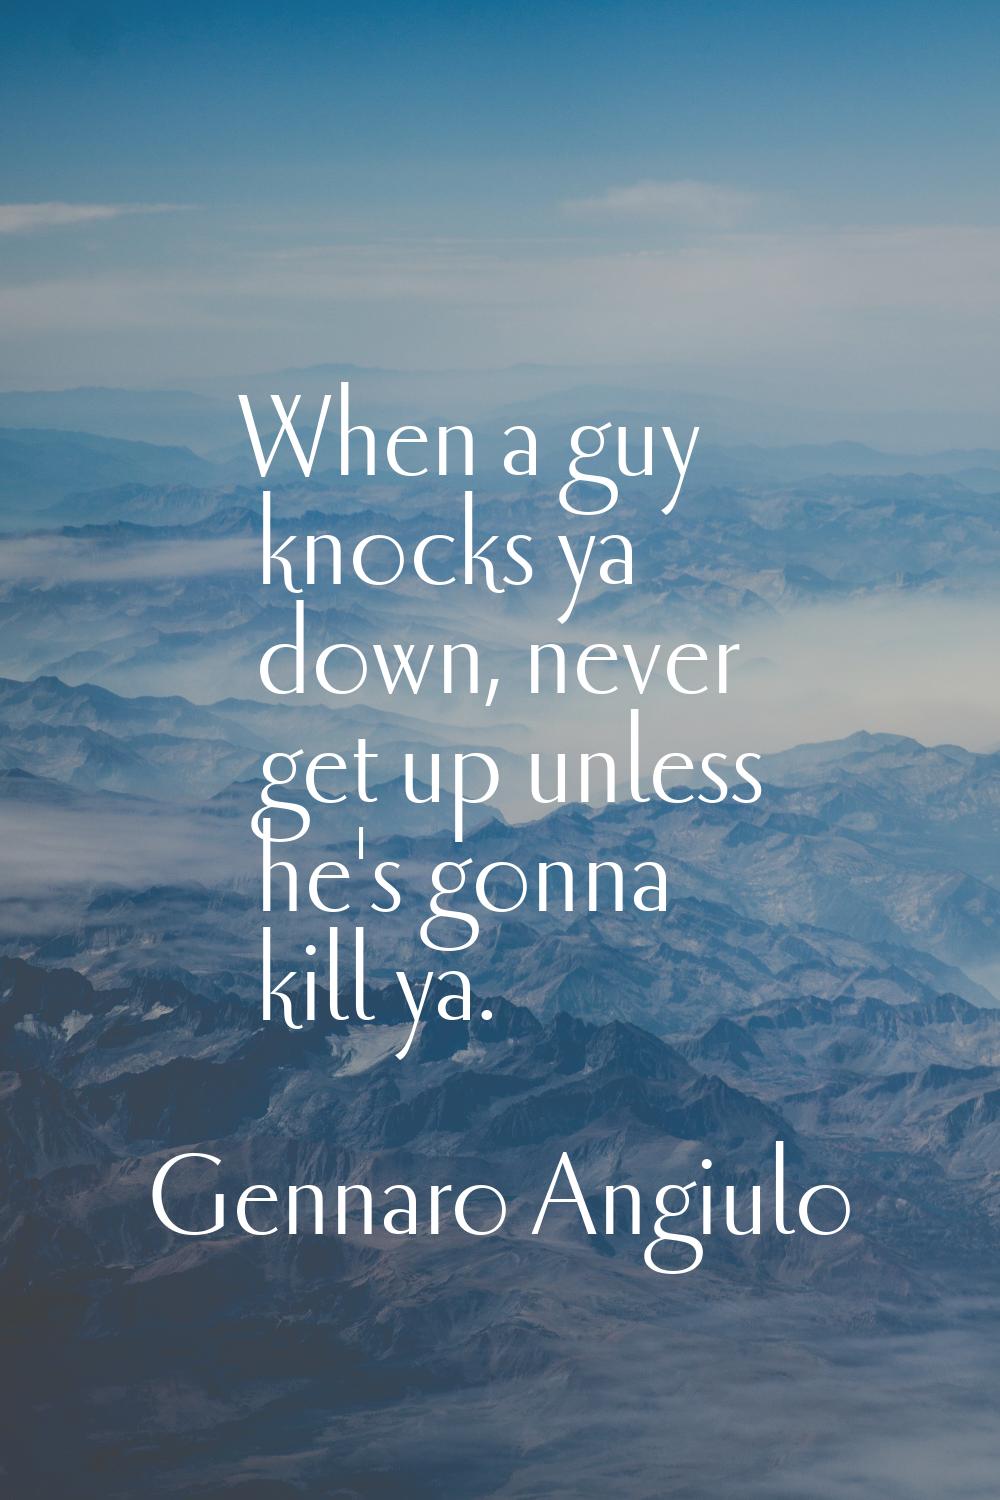 When a guy knocks ya down, never get up unless he's gonna kill ya.